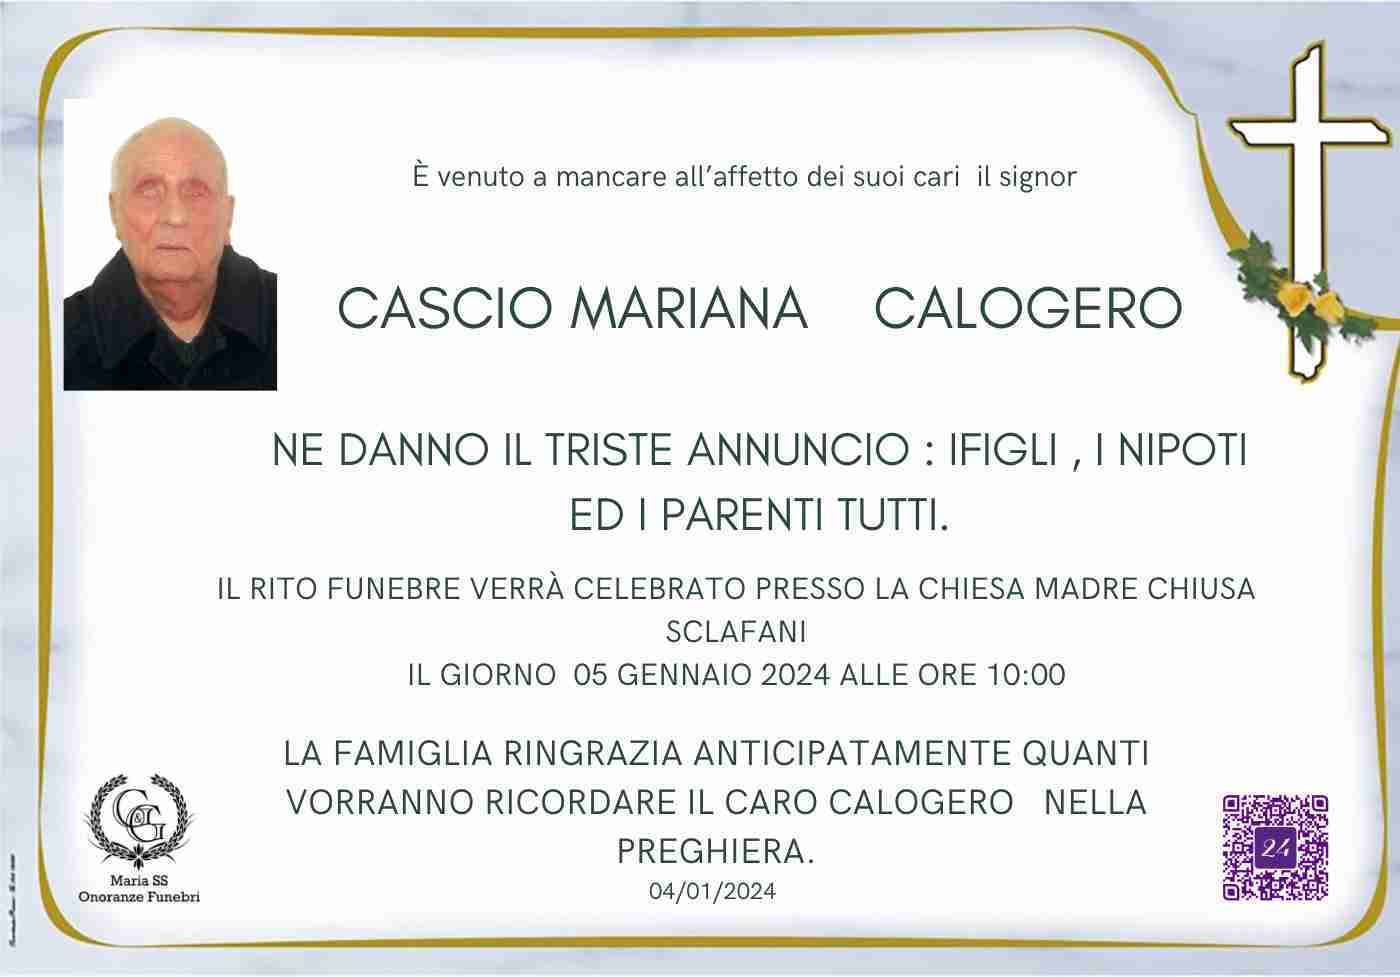 Calogero Cascio Mariana